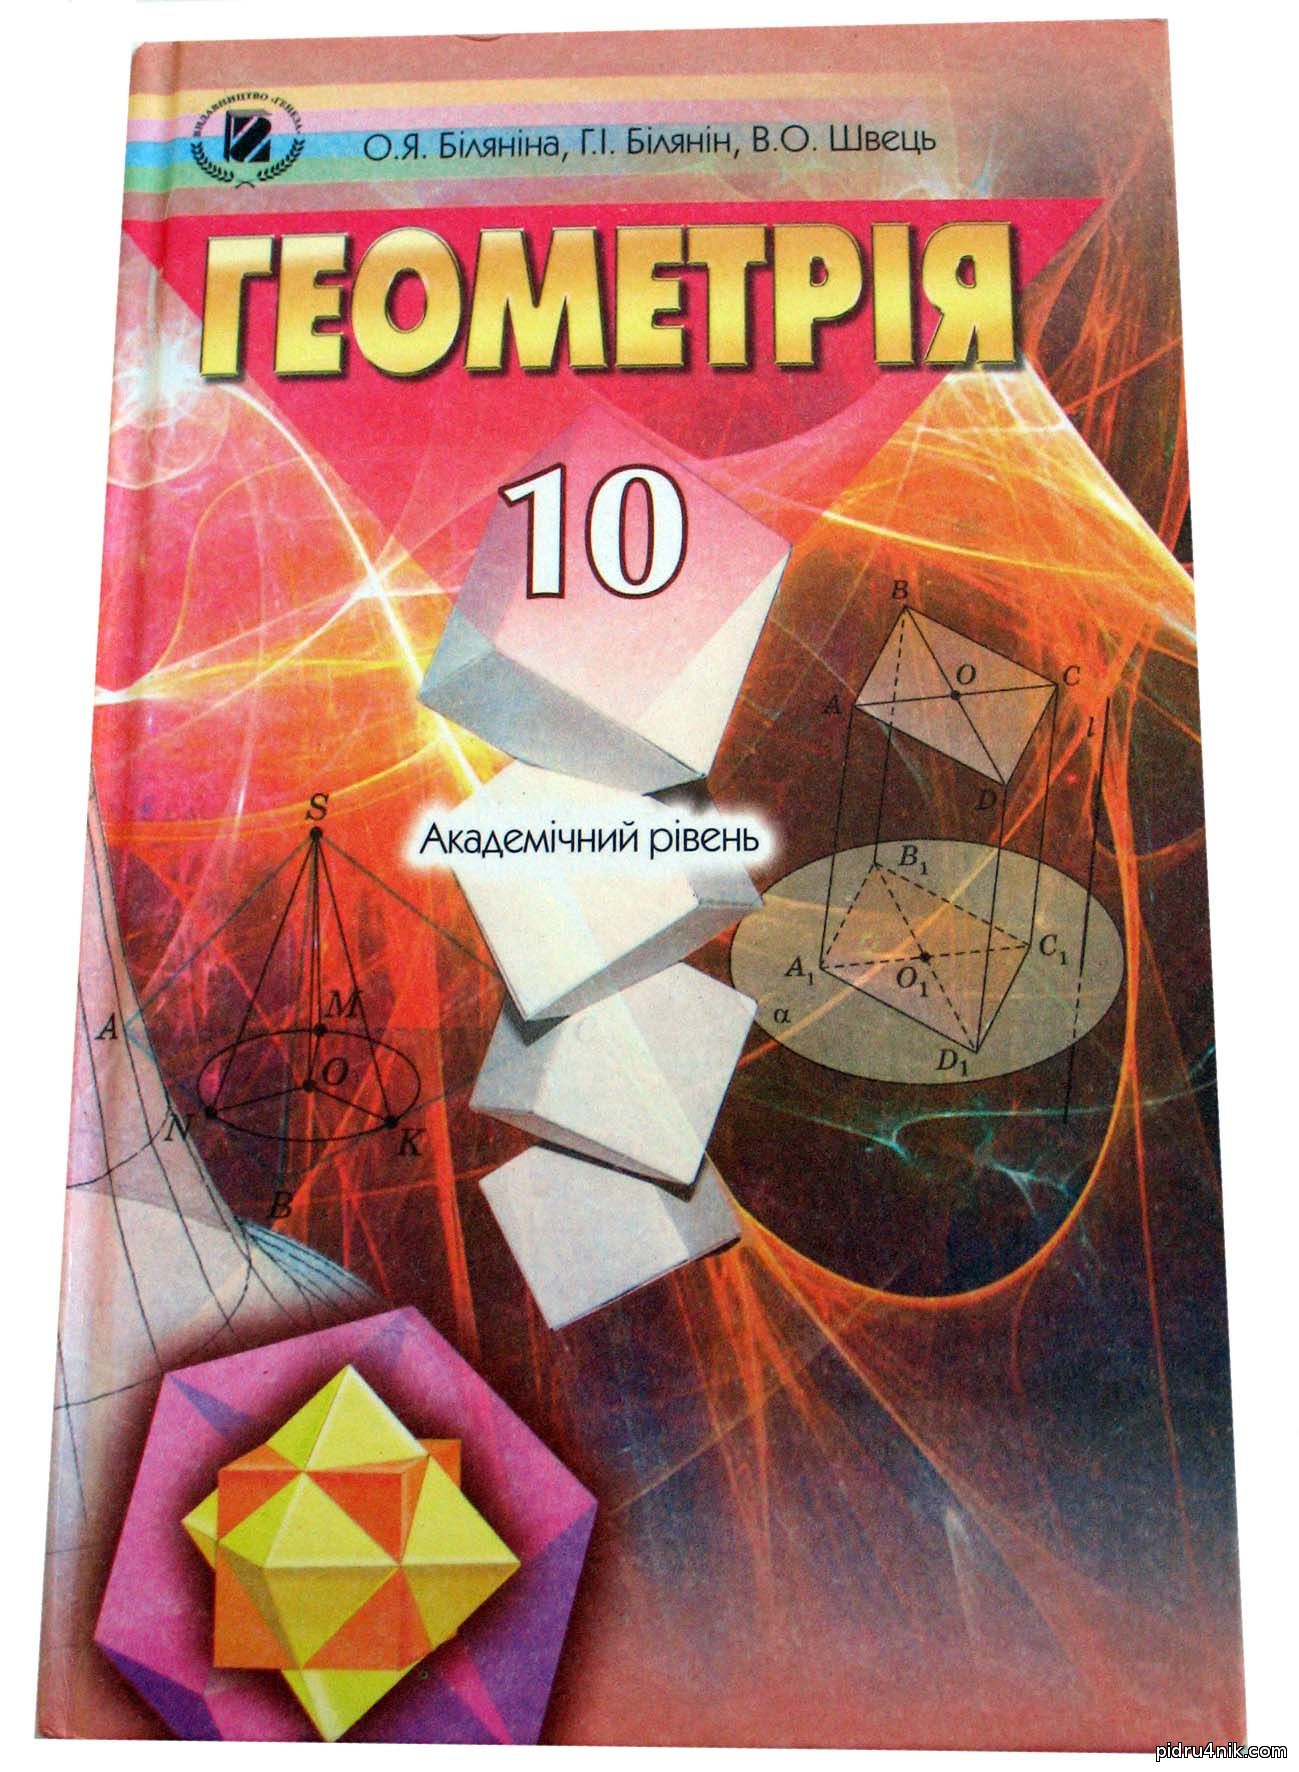 Спиши ру математику. Геометрия 10 класс. Геометрия учебник. Геометрия 10 класс учебник. Учебник по геометрии 10 класс.